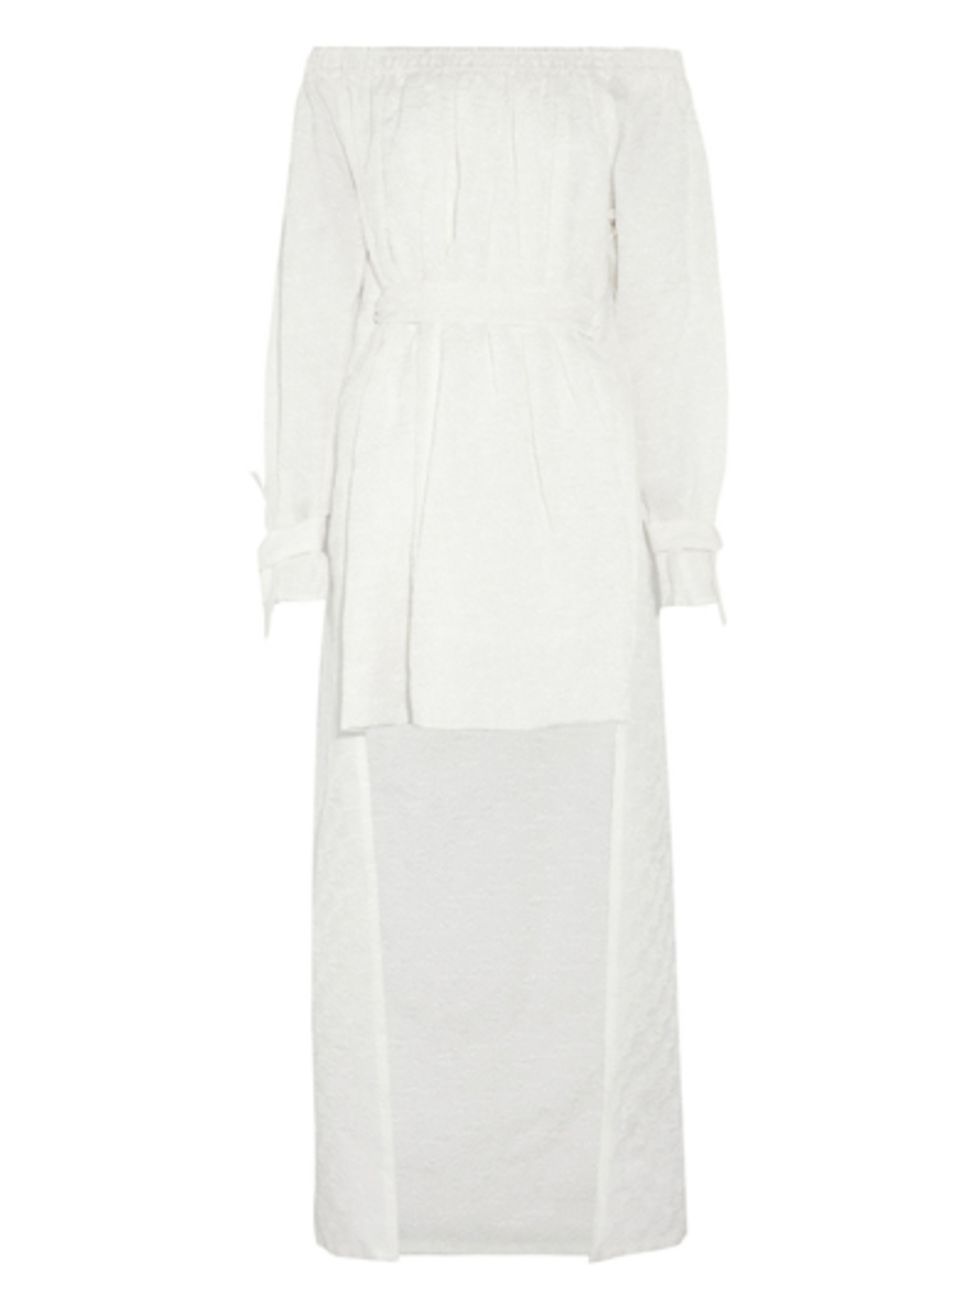 Sleeve, Textile, White, Style, Fashion, Pattern, Grey, Beige, One-piece garment, Day dress, 